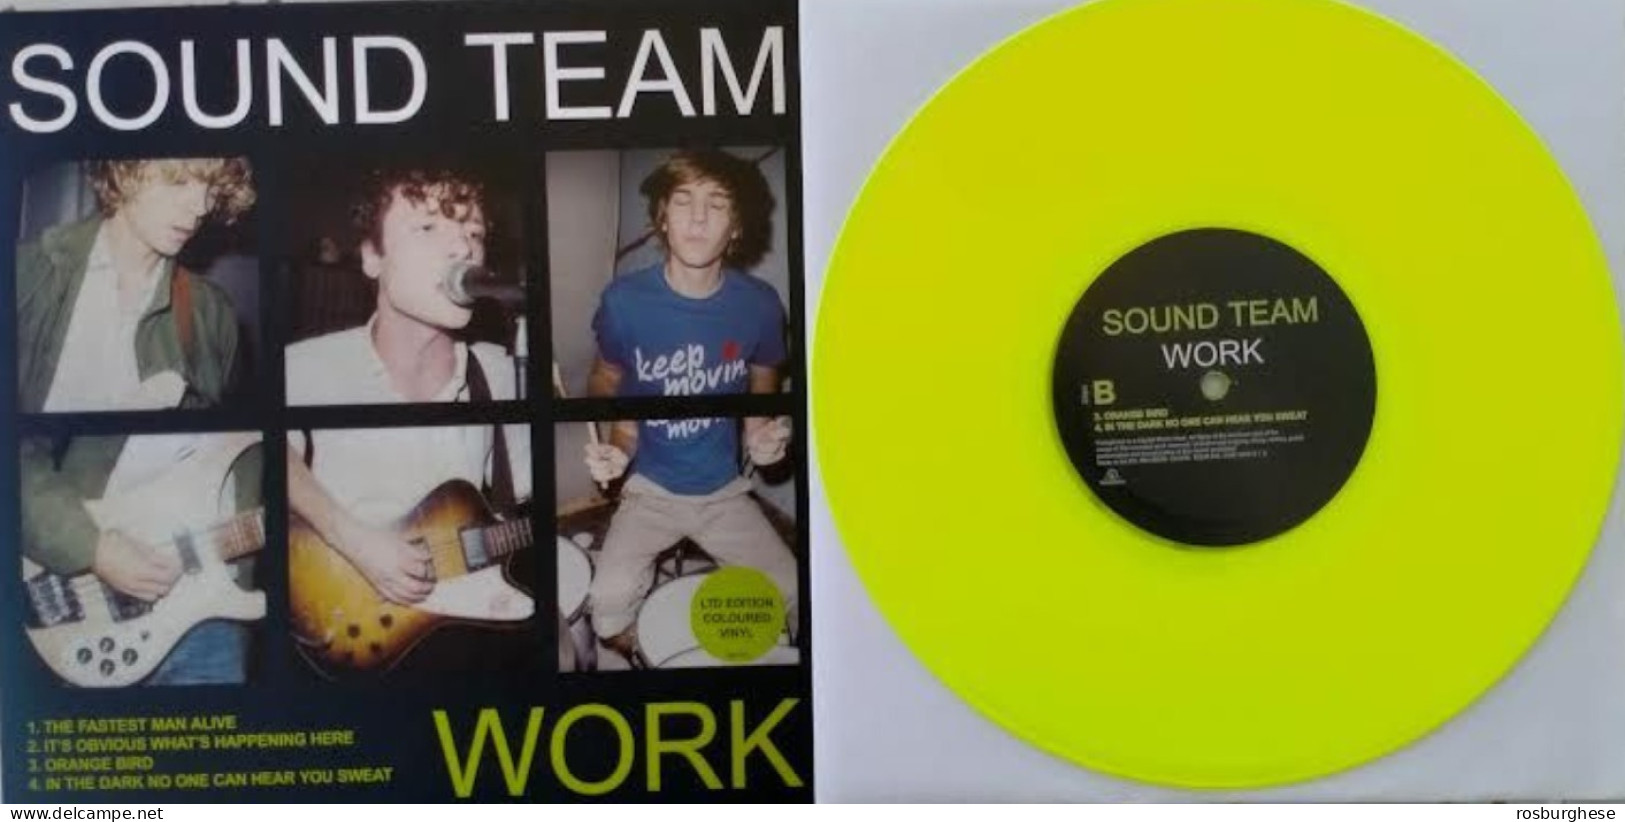 Sound Team Work 10" Vinile Colorato Giallo - Formatos Especiales